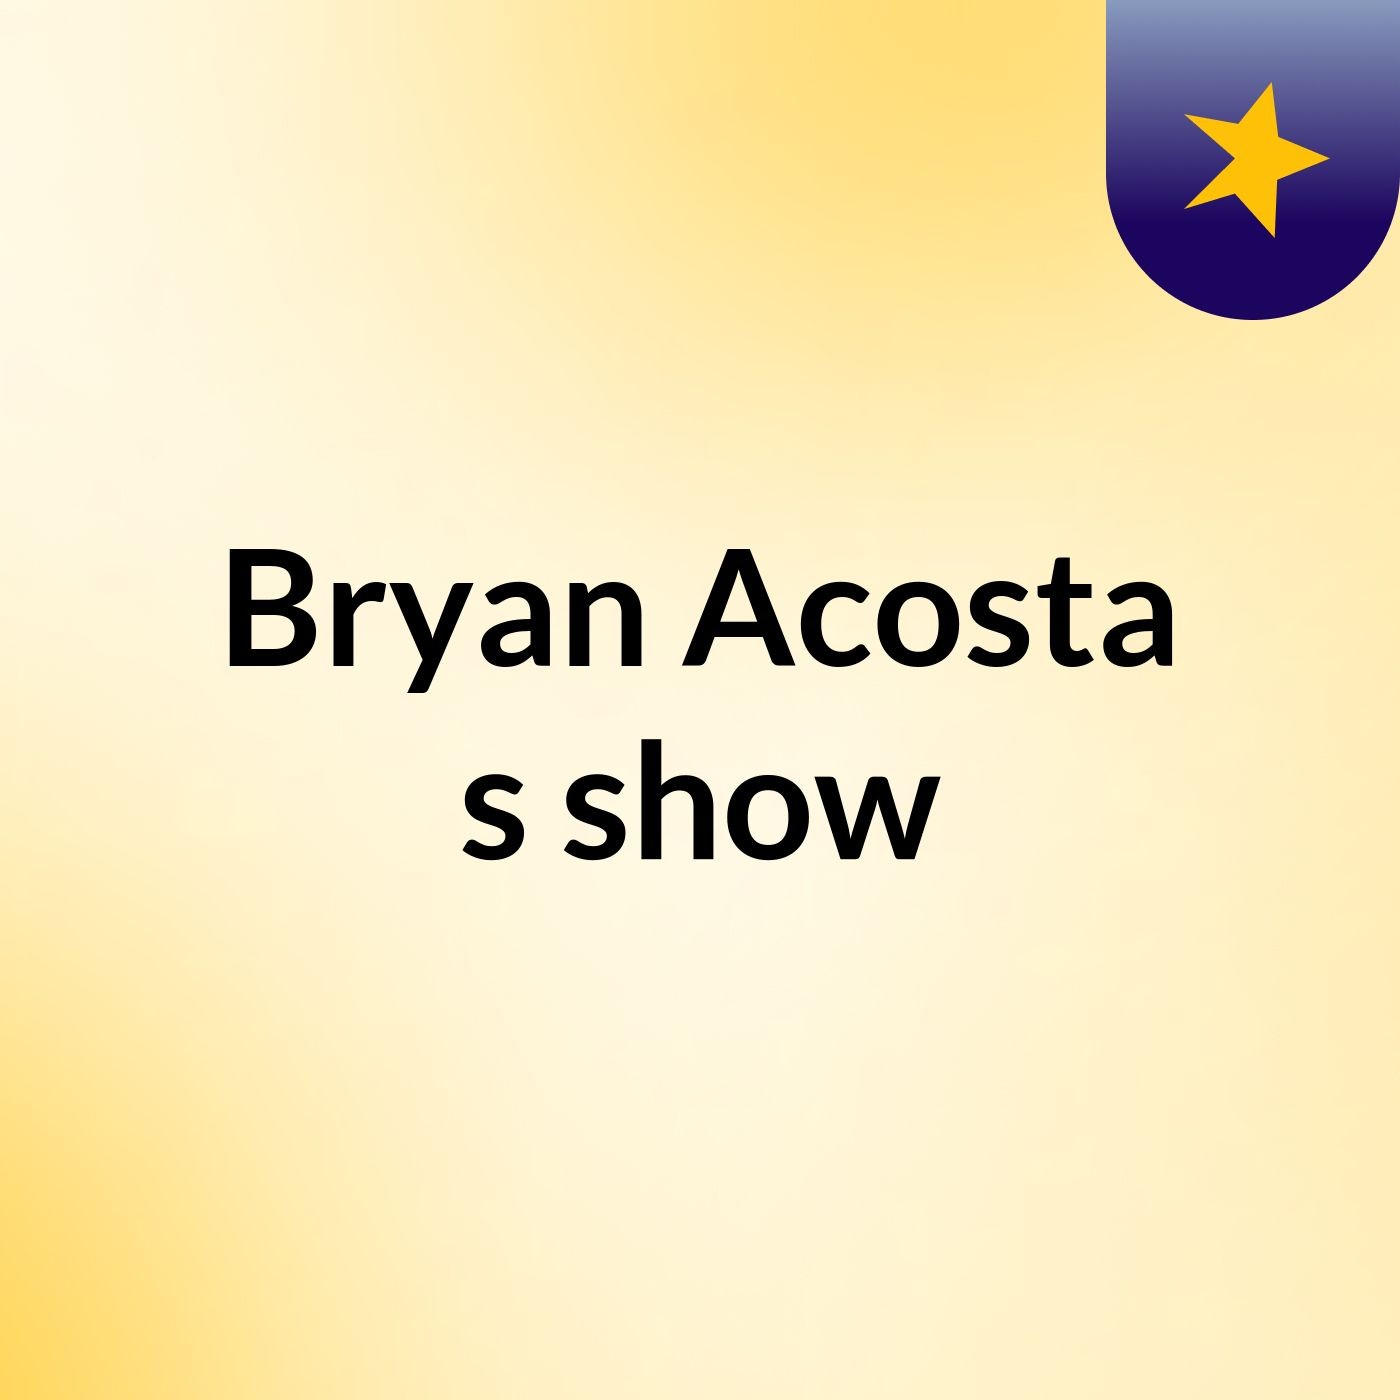 Bryan Acosta's show